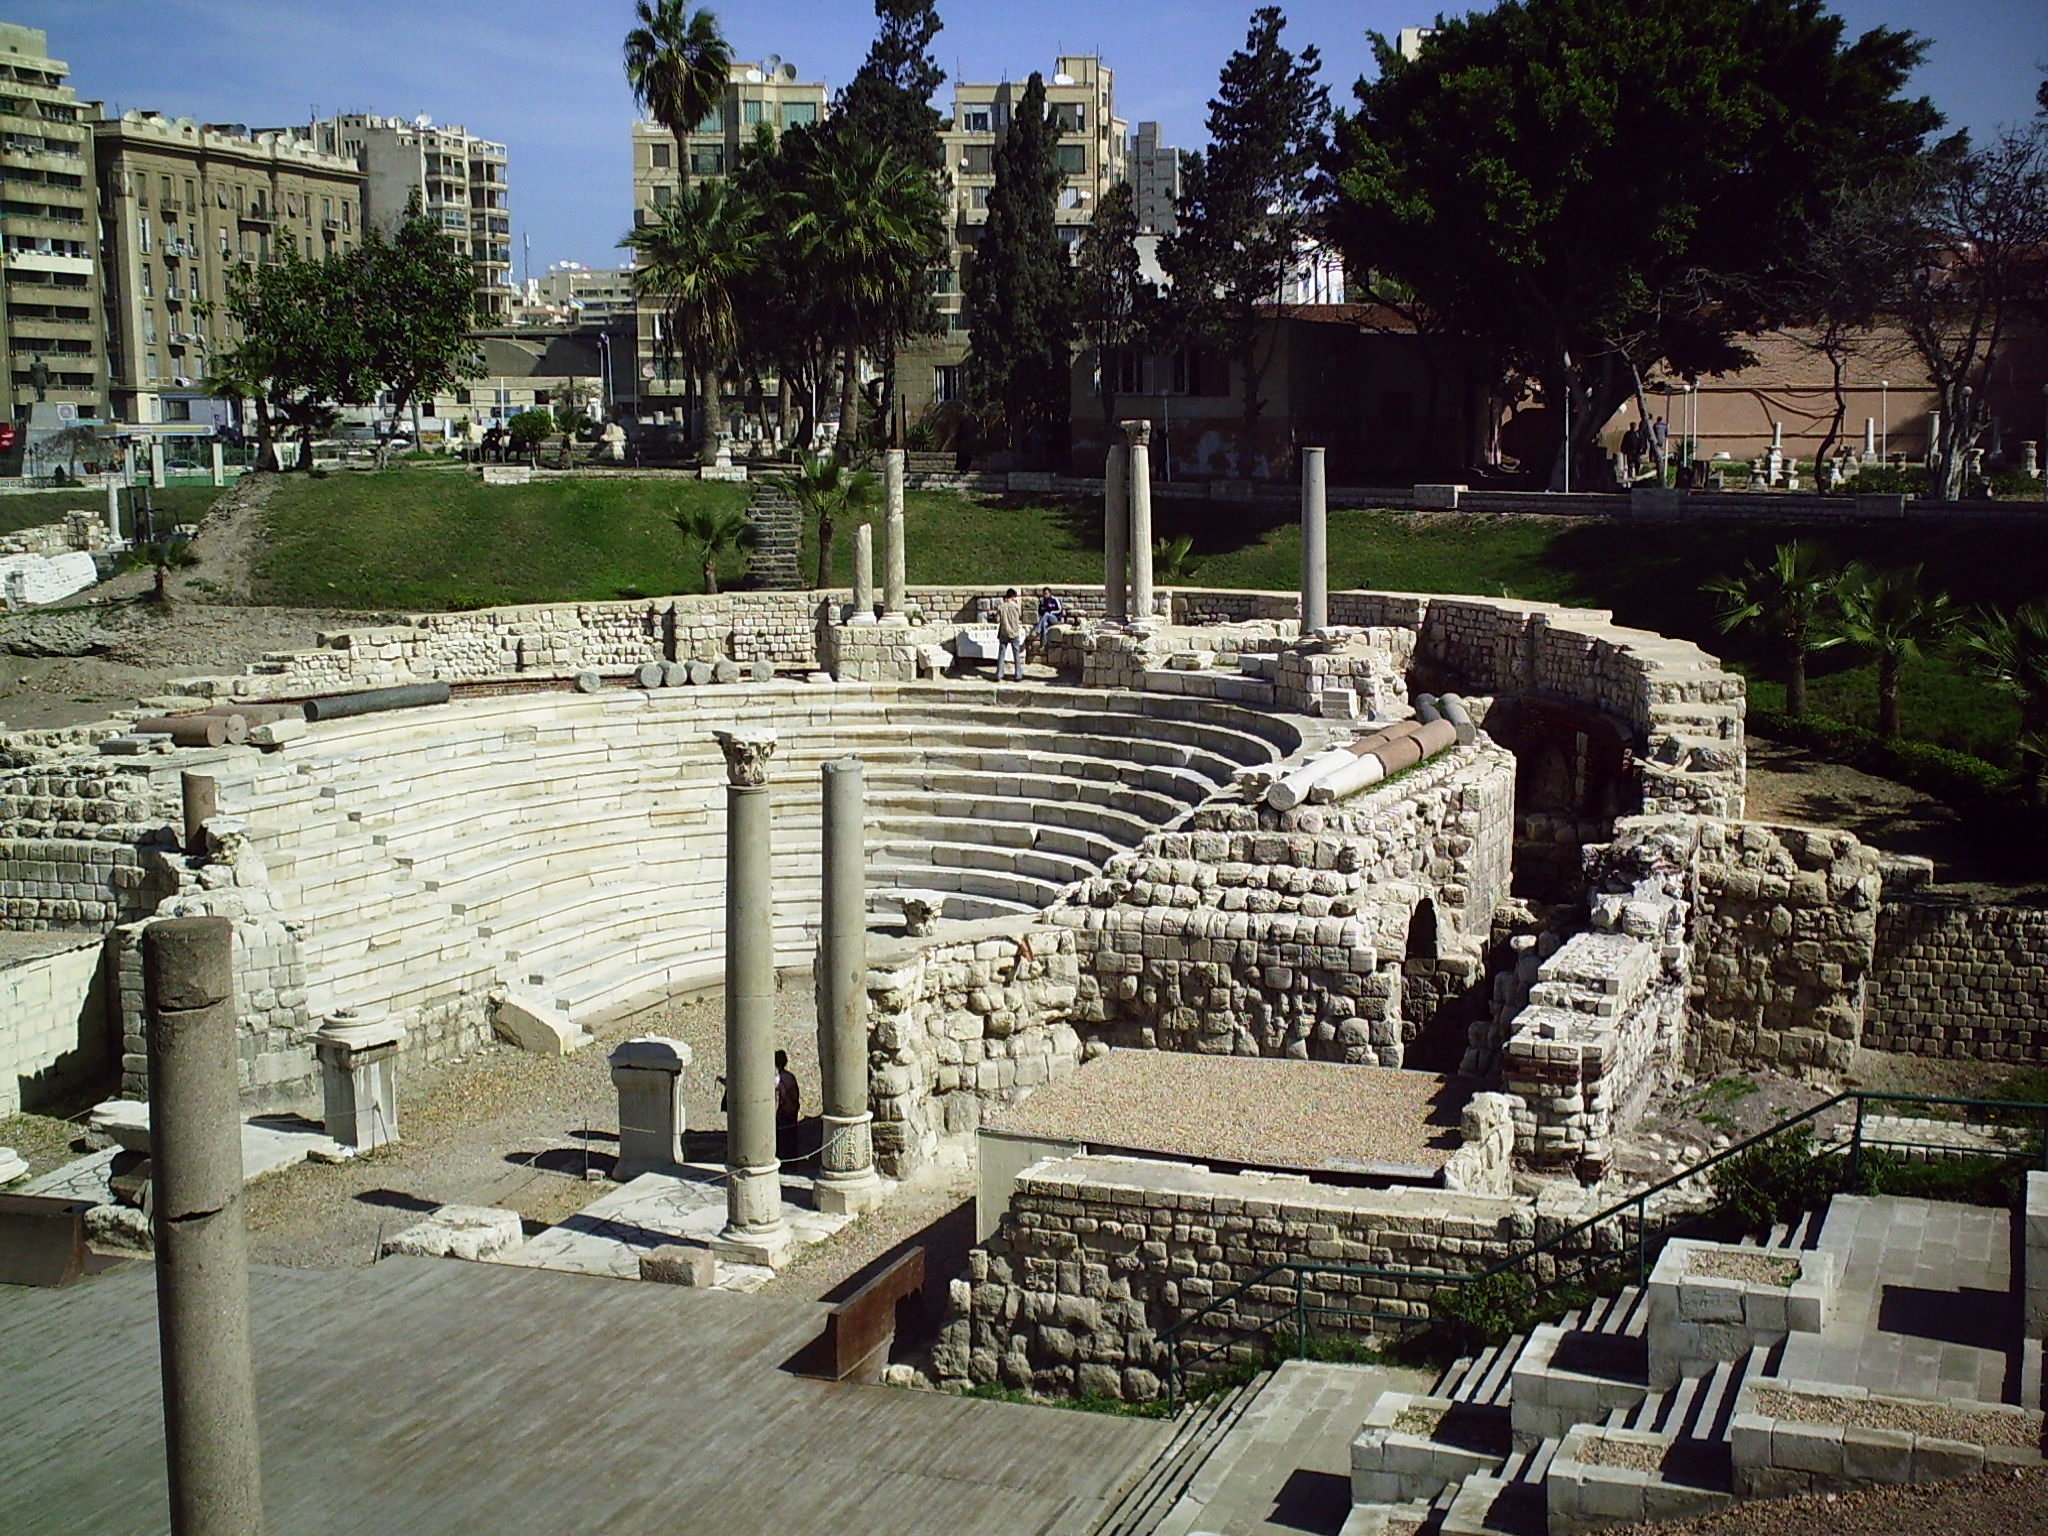  Ruin of ancient Roman Ampitheater in Alexandria, Egypt 